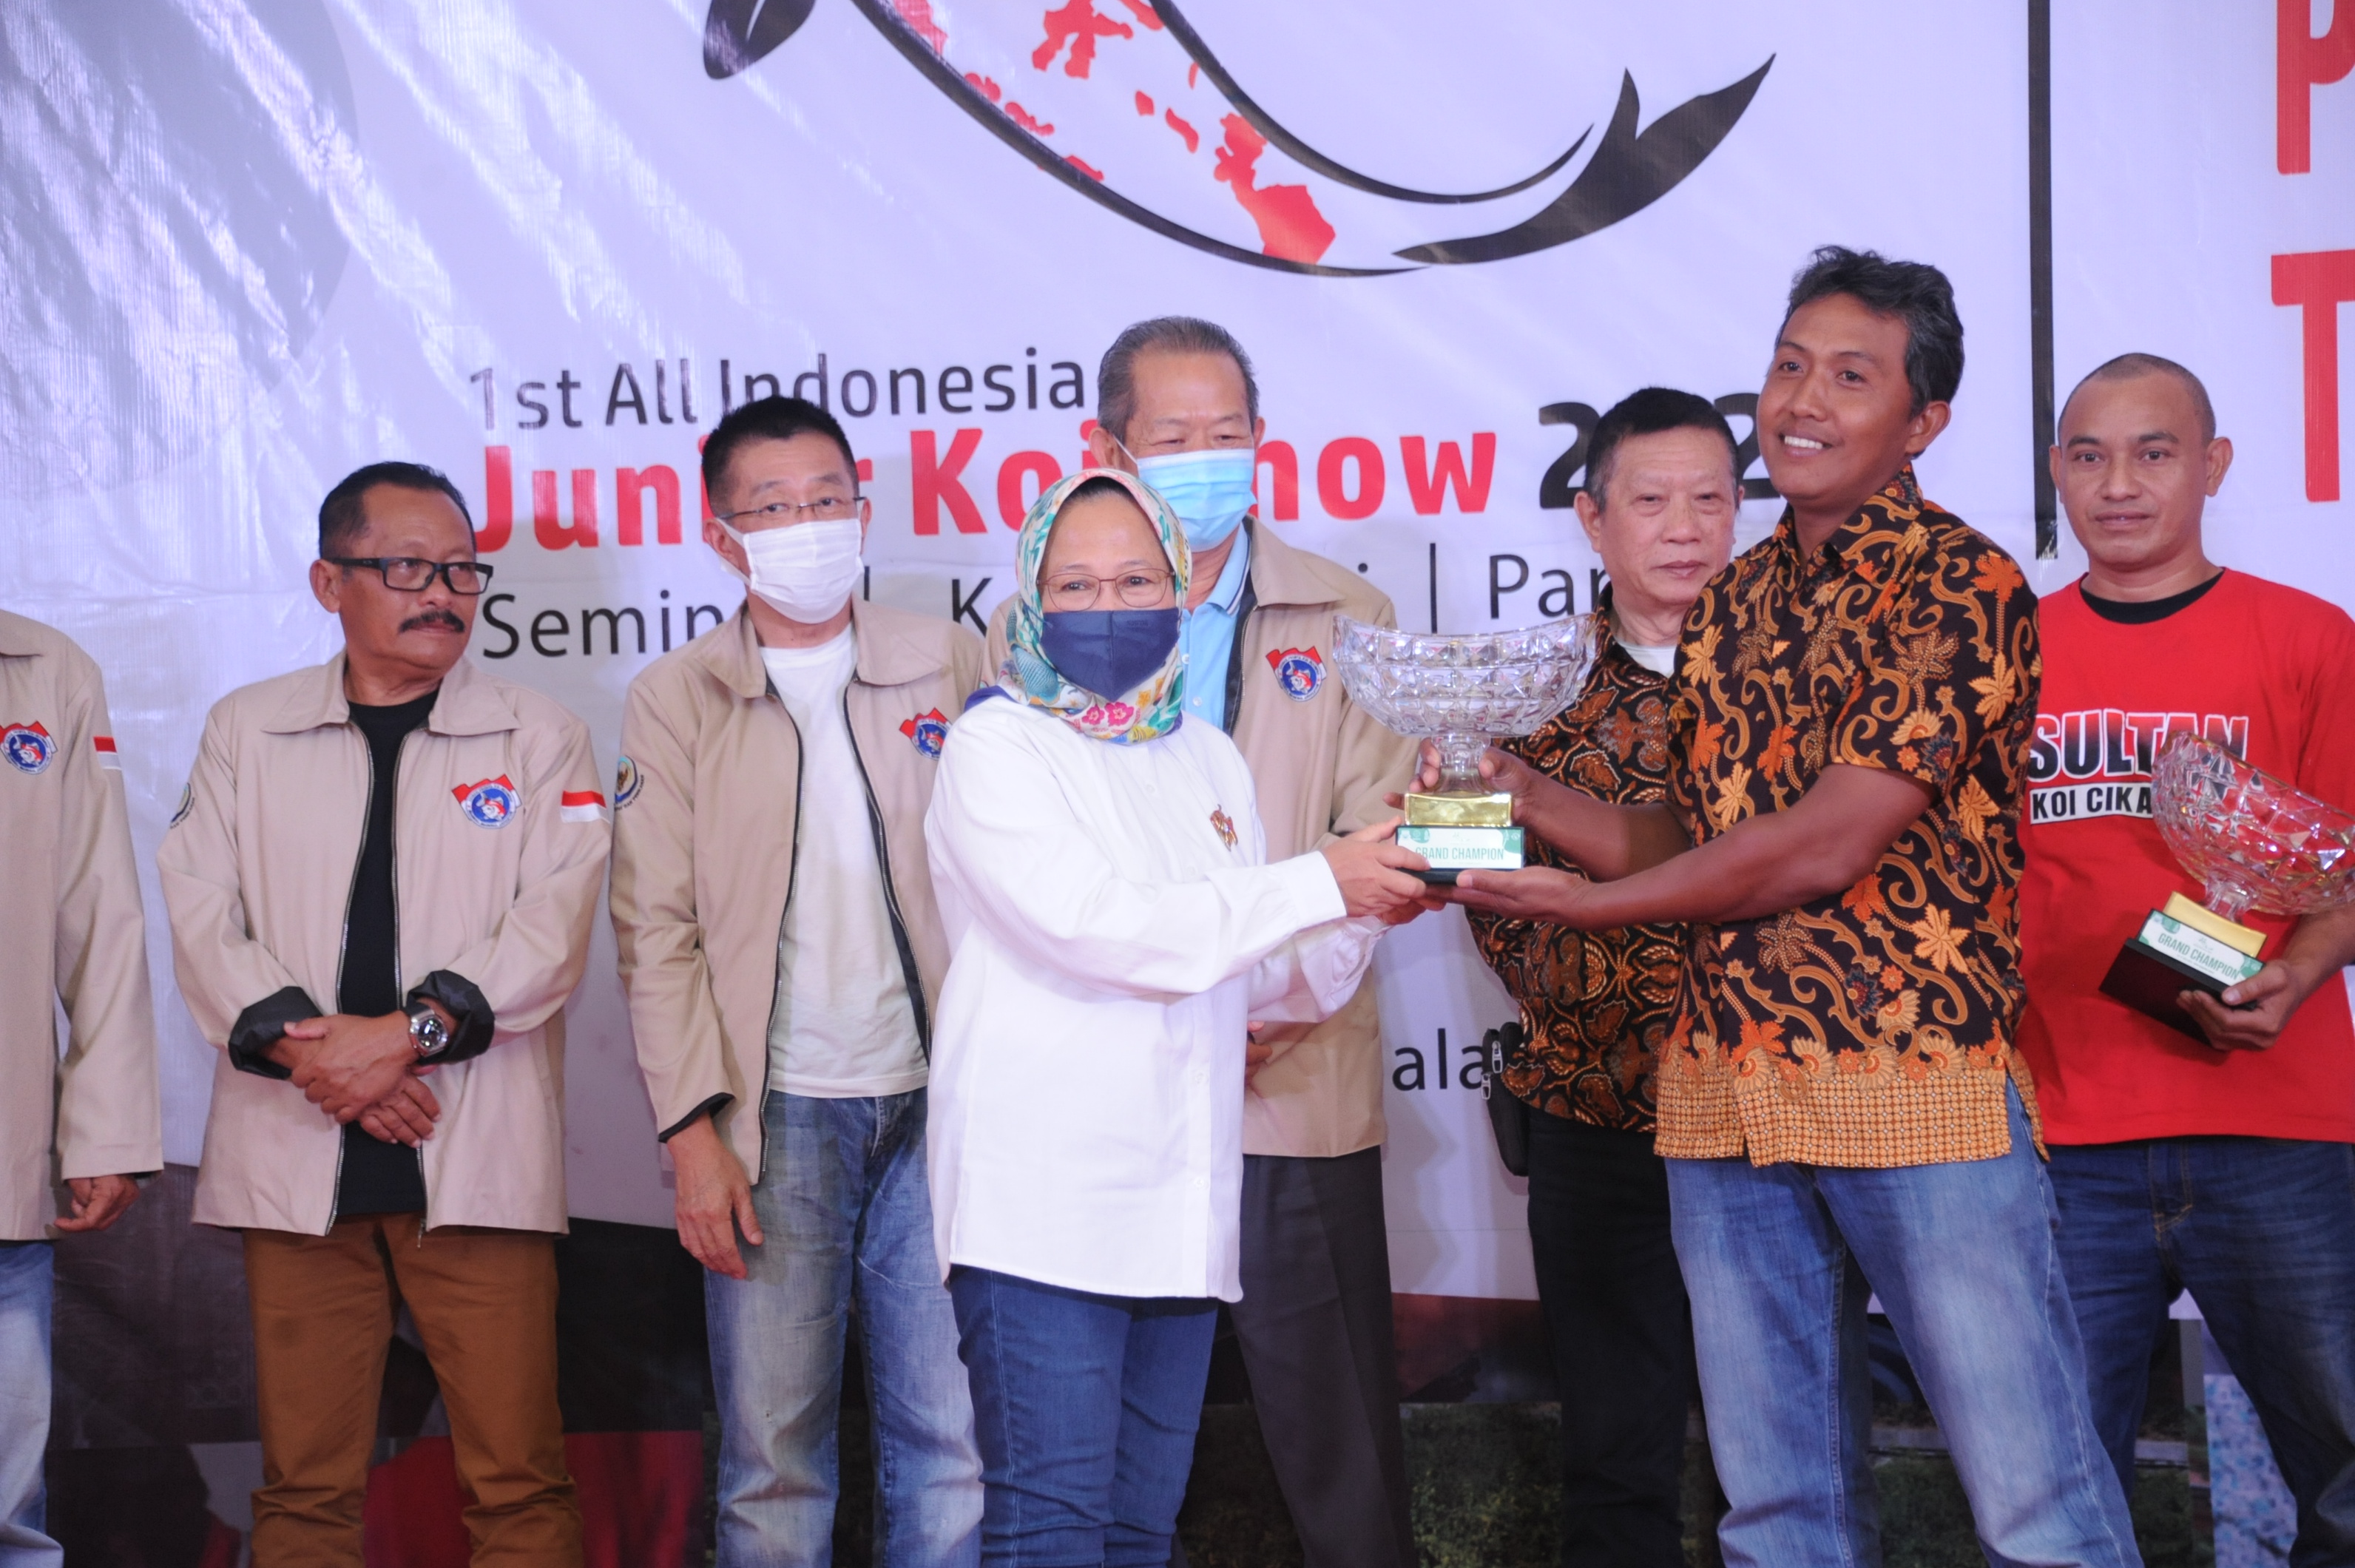 1st All Indonesia Junior Koi Show 2022